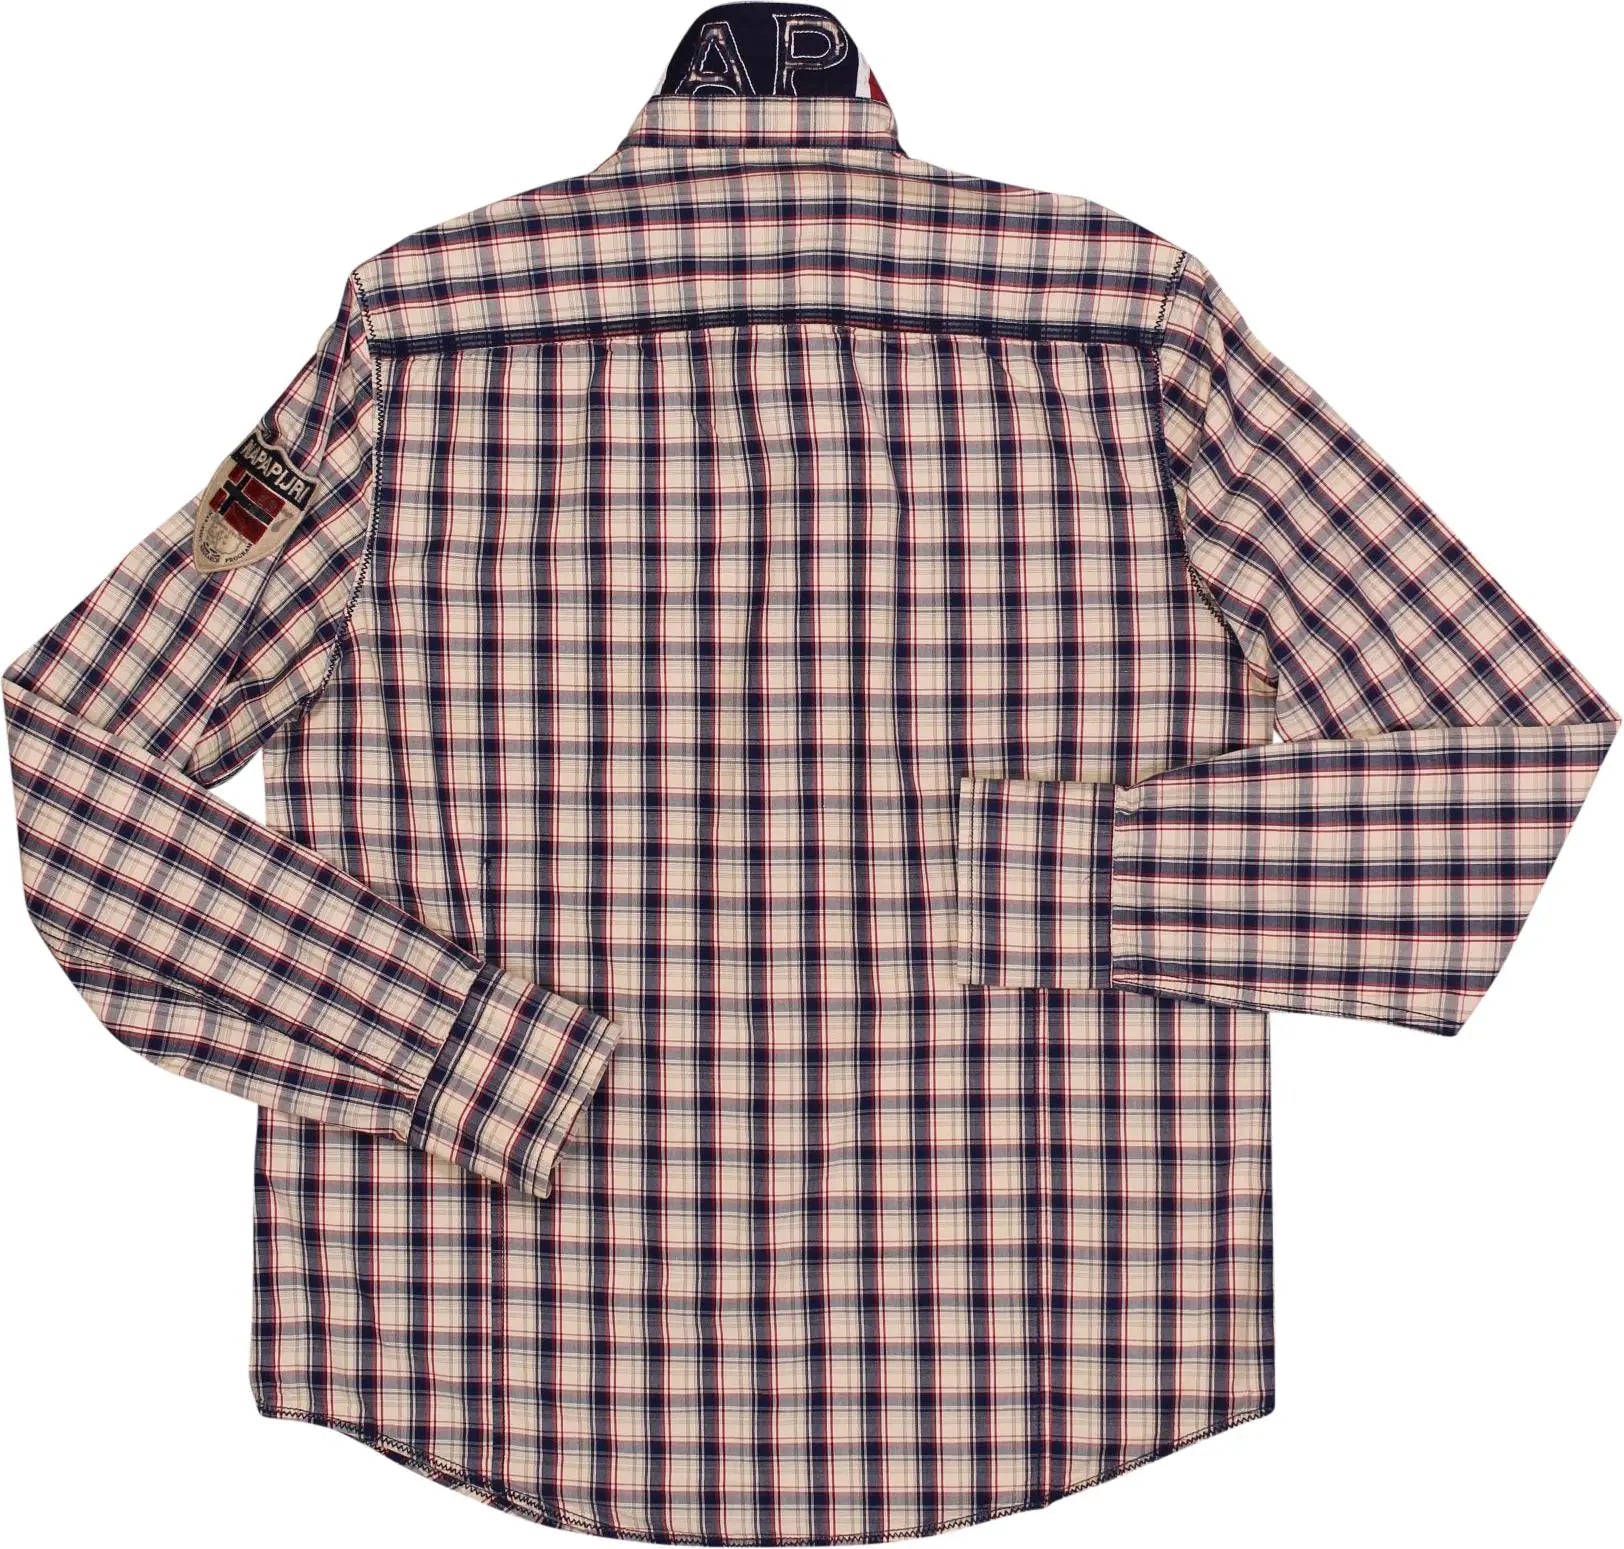 Napapijri - Checked Shirt by Napapijri- ThriftTale.com - Vintage and second handclothing